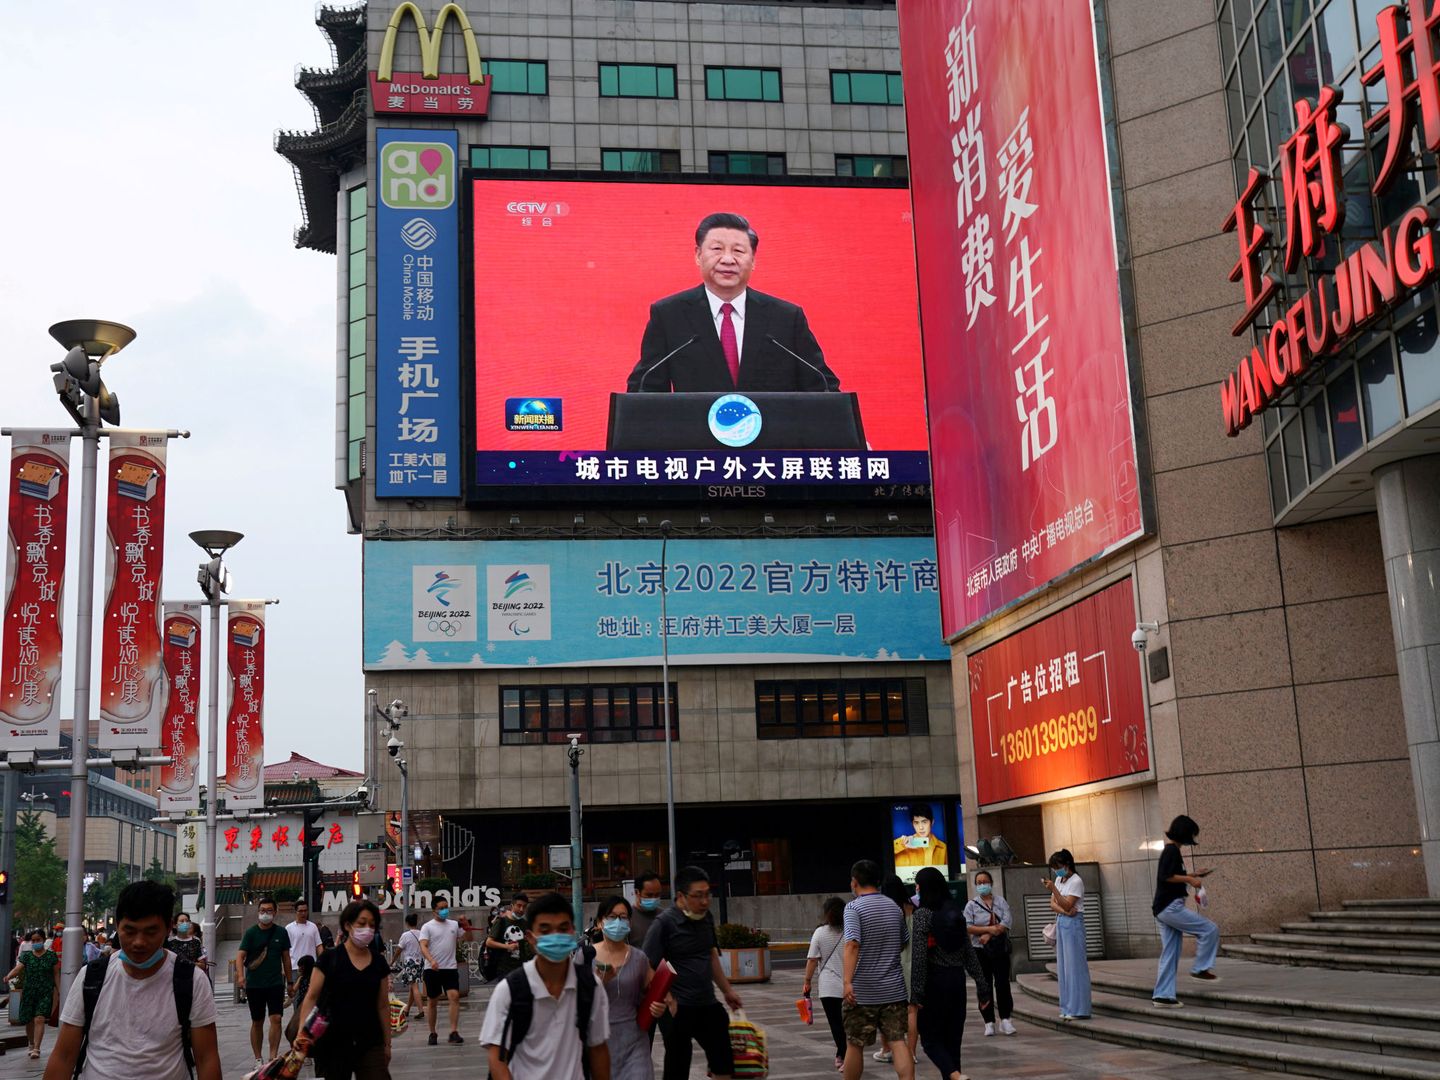 Pantallas en Beijing emiten un discurso del presidente chino, Xi Jinping. (Reuters)